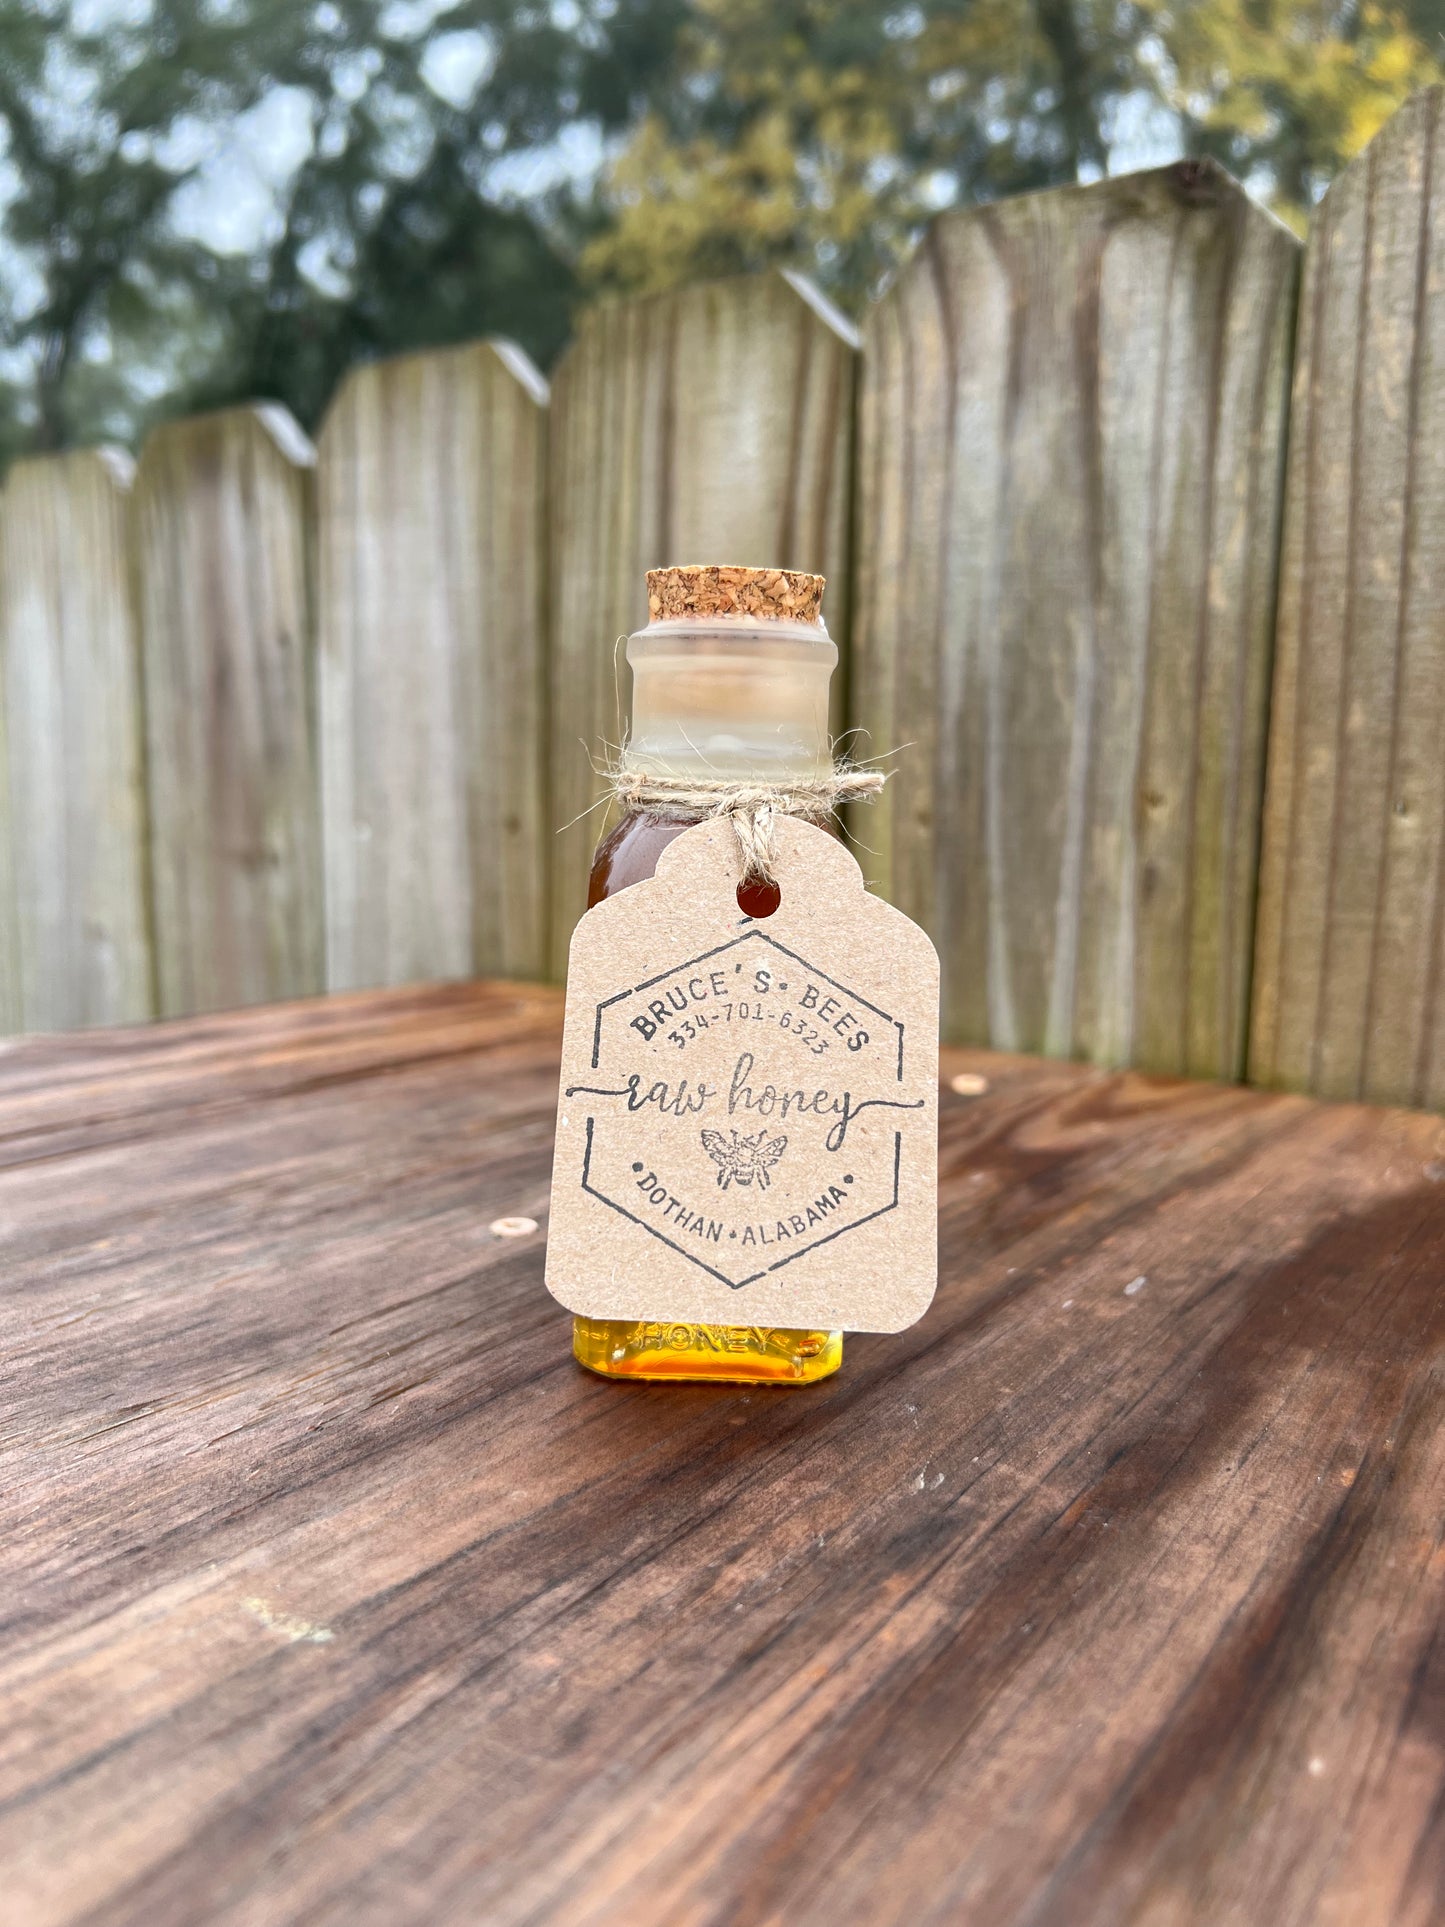 Classic Muth Jars of South Alabama Honey